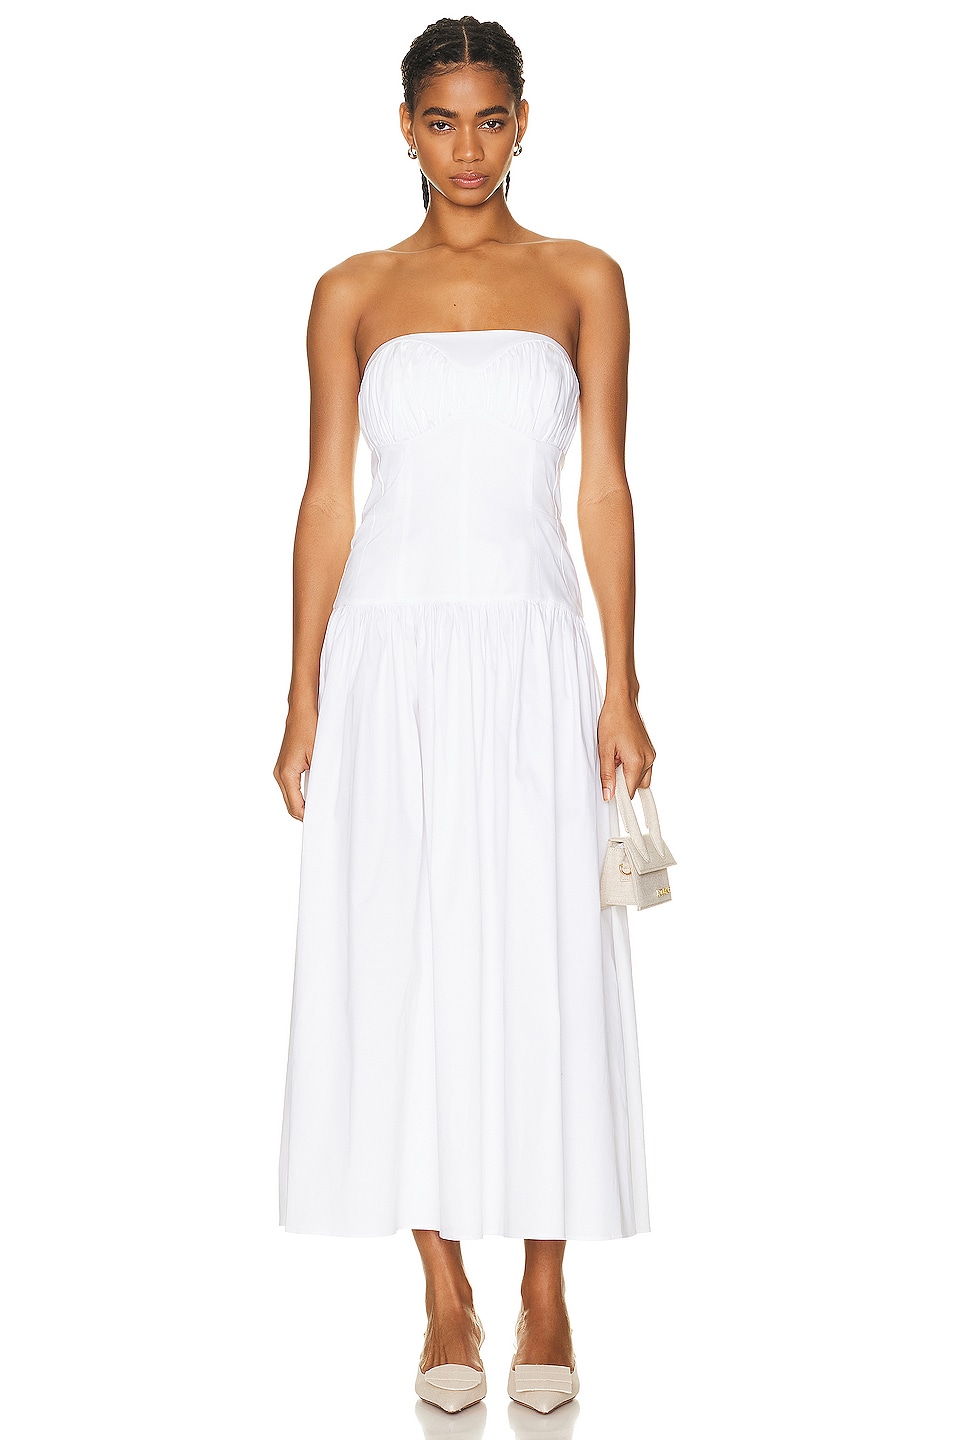 TOVE Lauryn Dress in White | FWRD